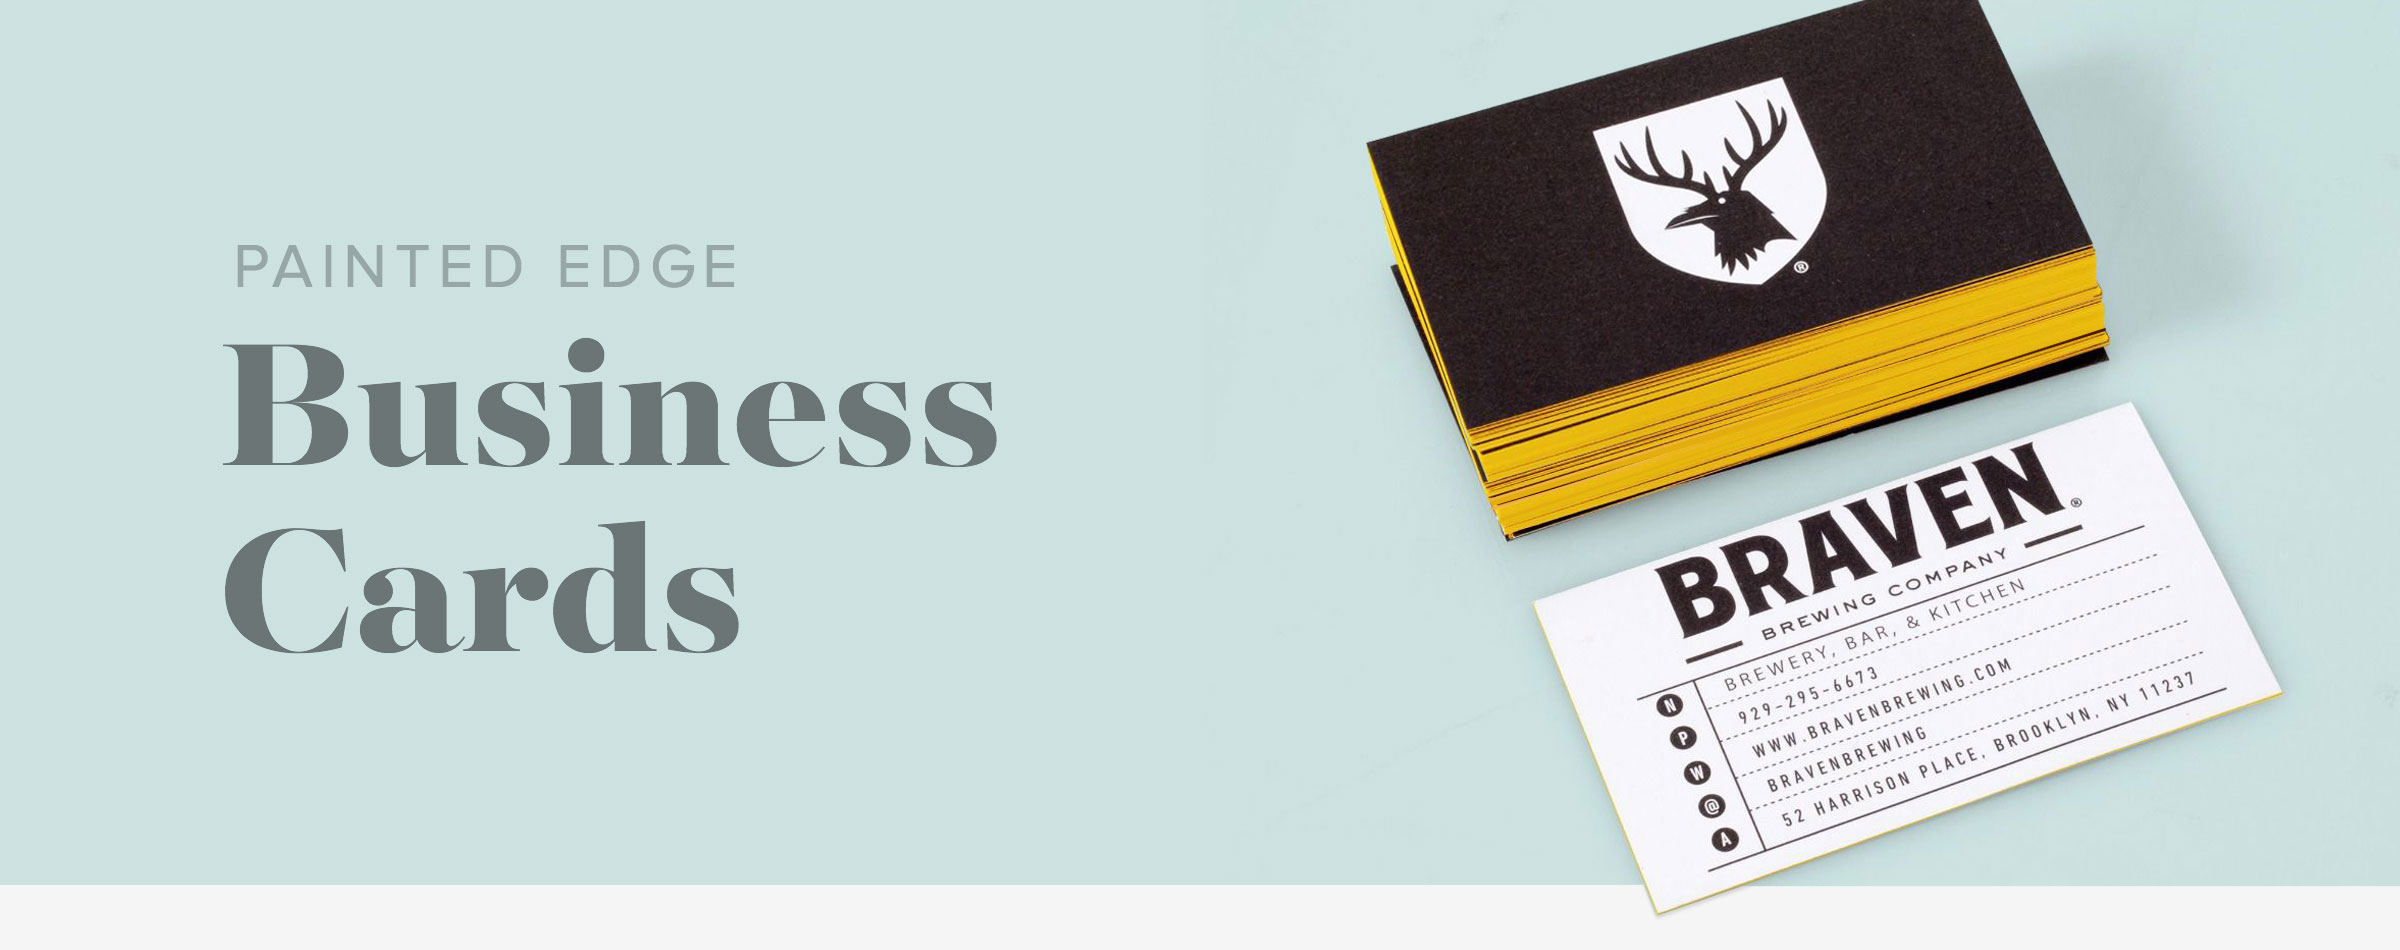 custom painted edge business cards 1 jakprints